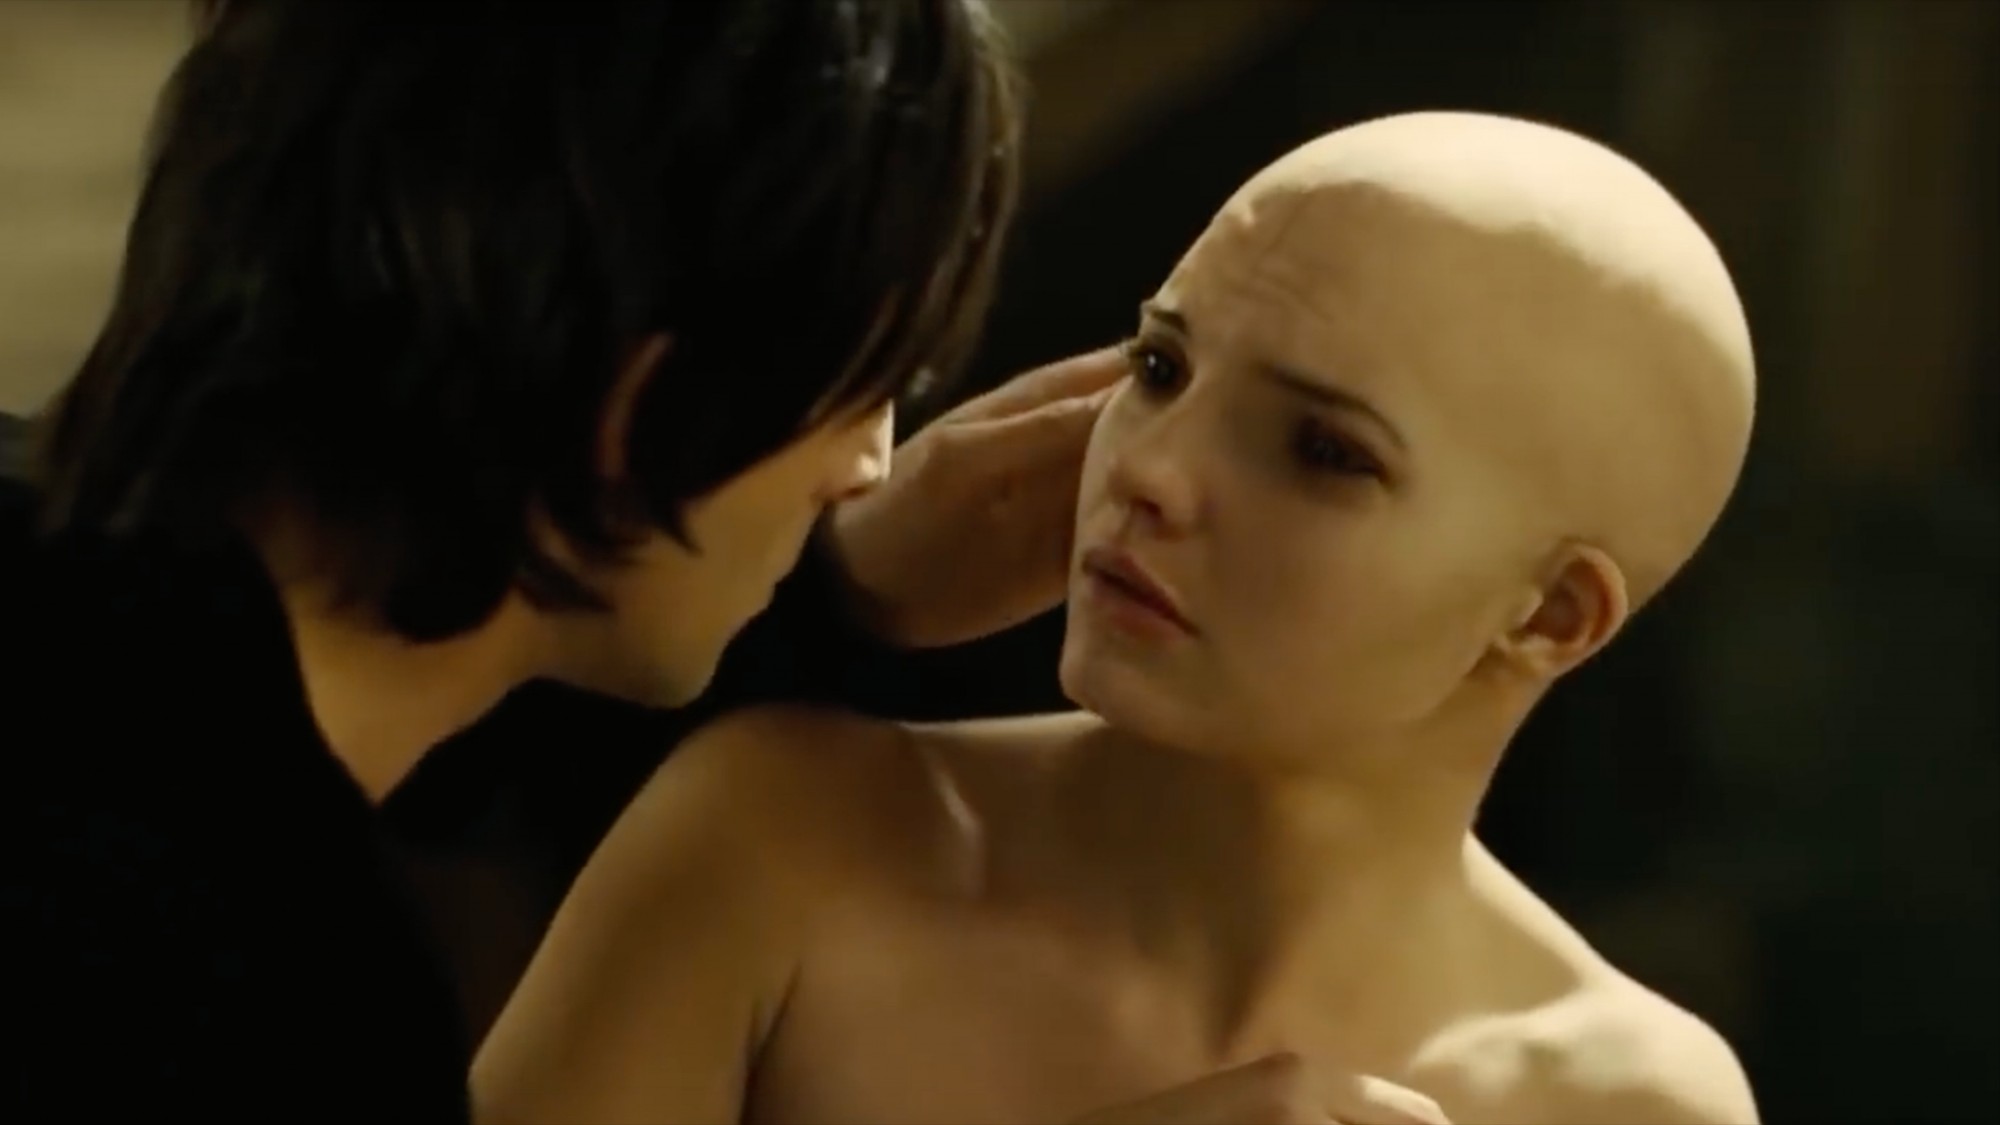 The Disturbing Sci-Fi Sex Scene from 'Splice' Is a Reminder ...